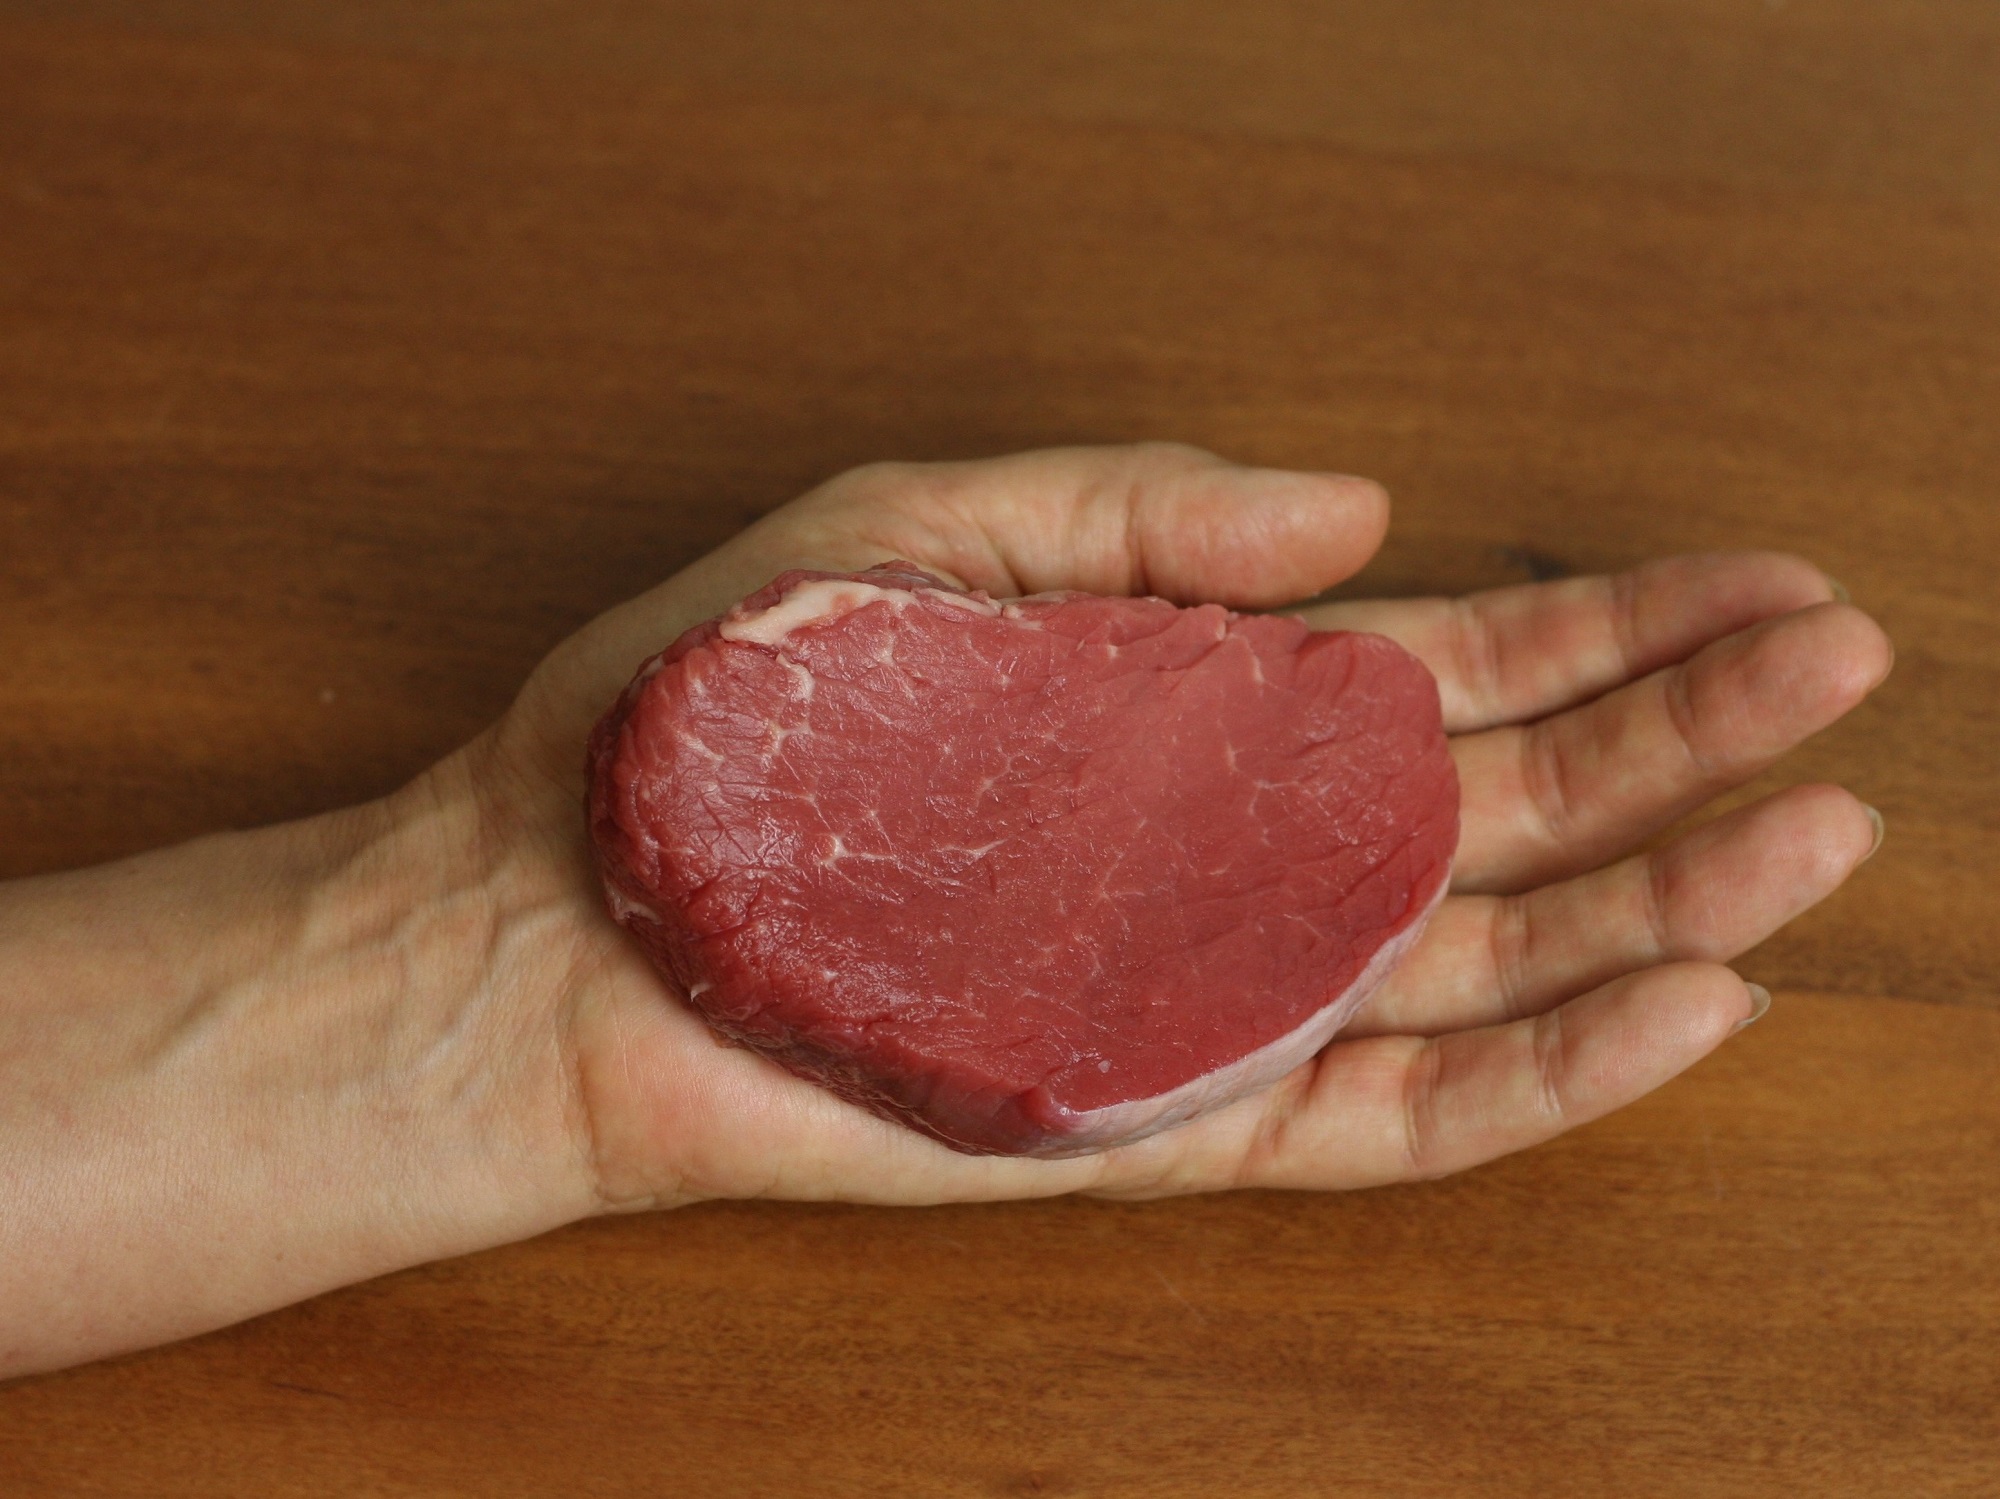 Meat raw serve size 150g